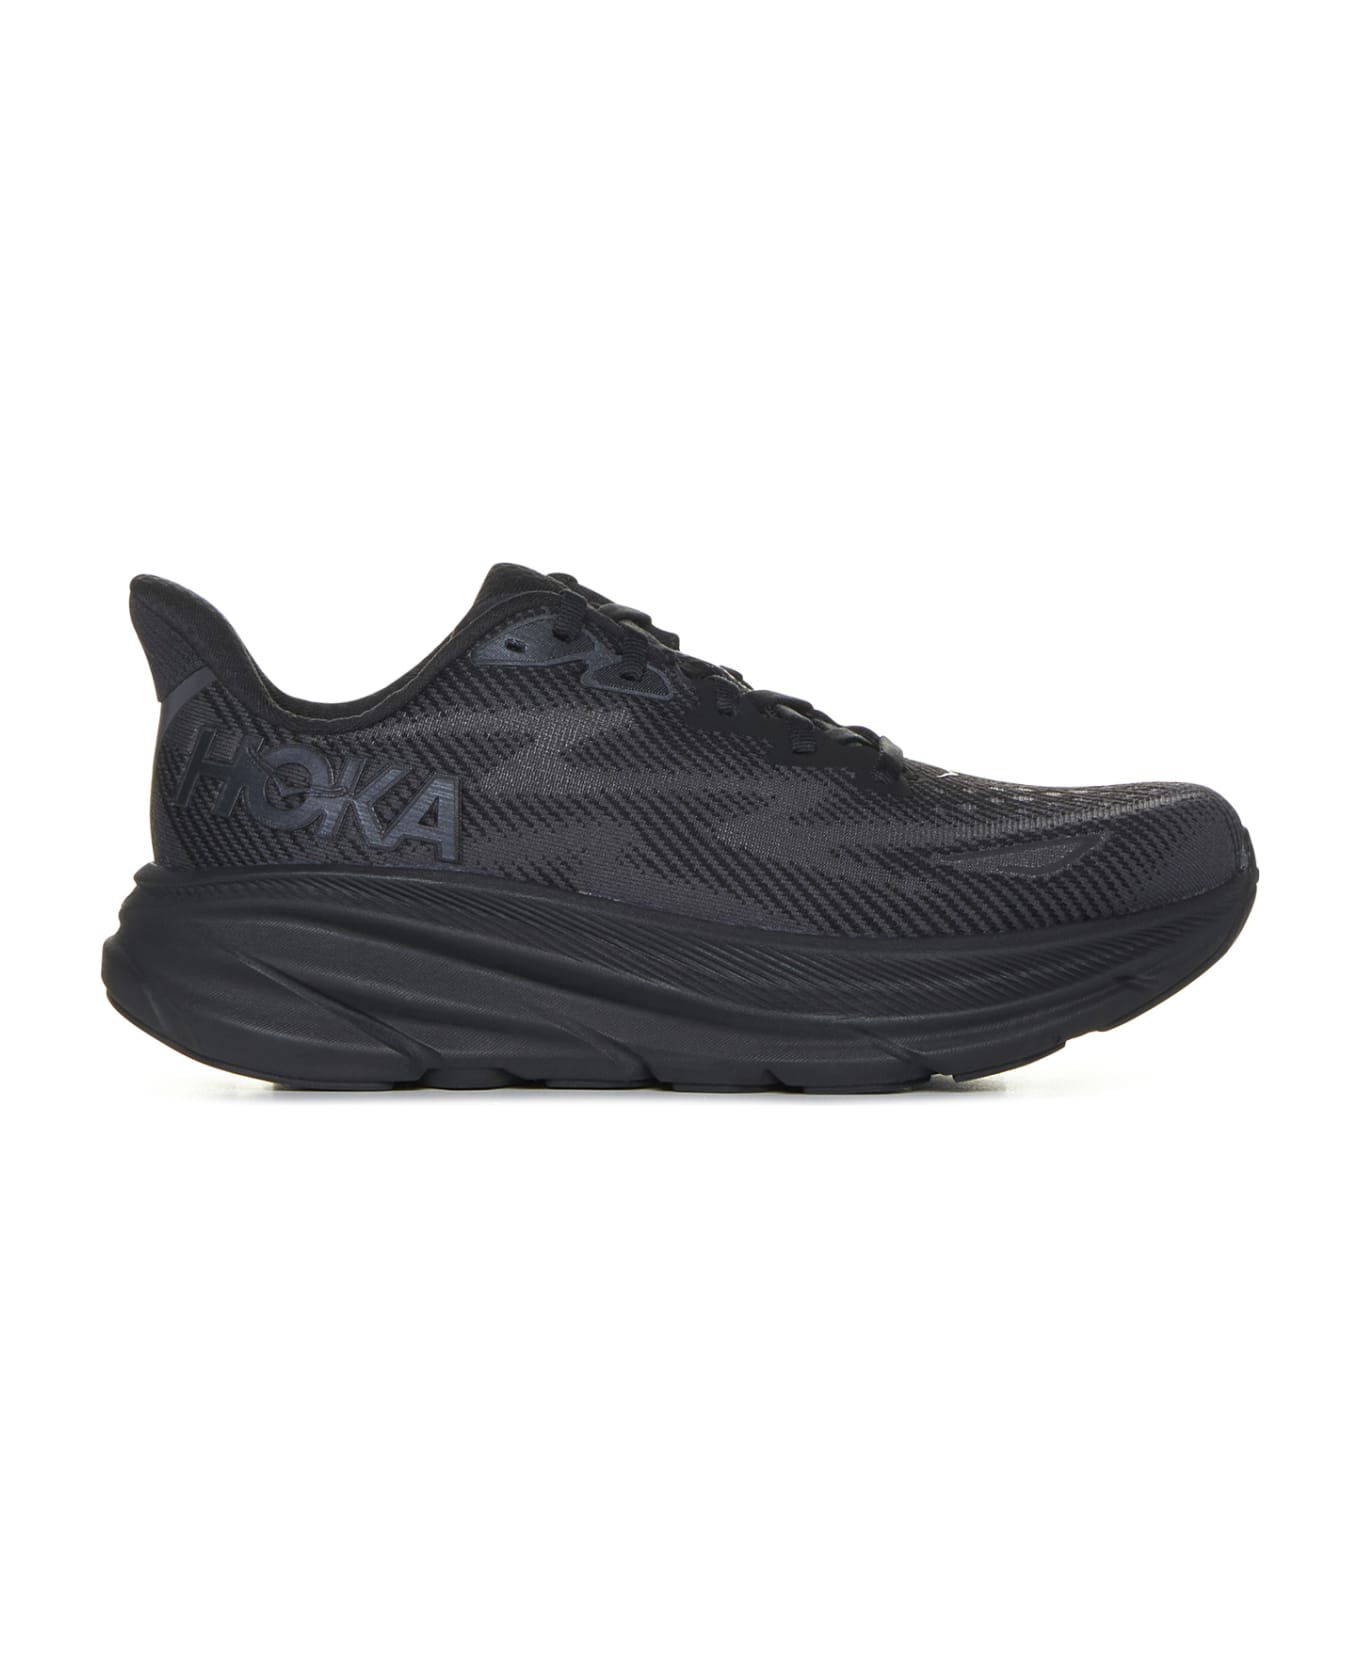 Hoka Sneakers - Black / black スニーカー